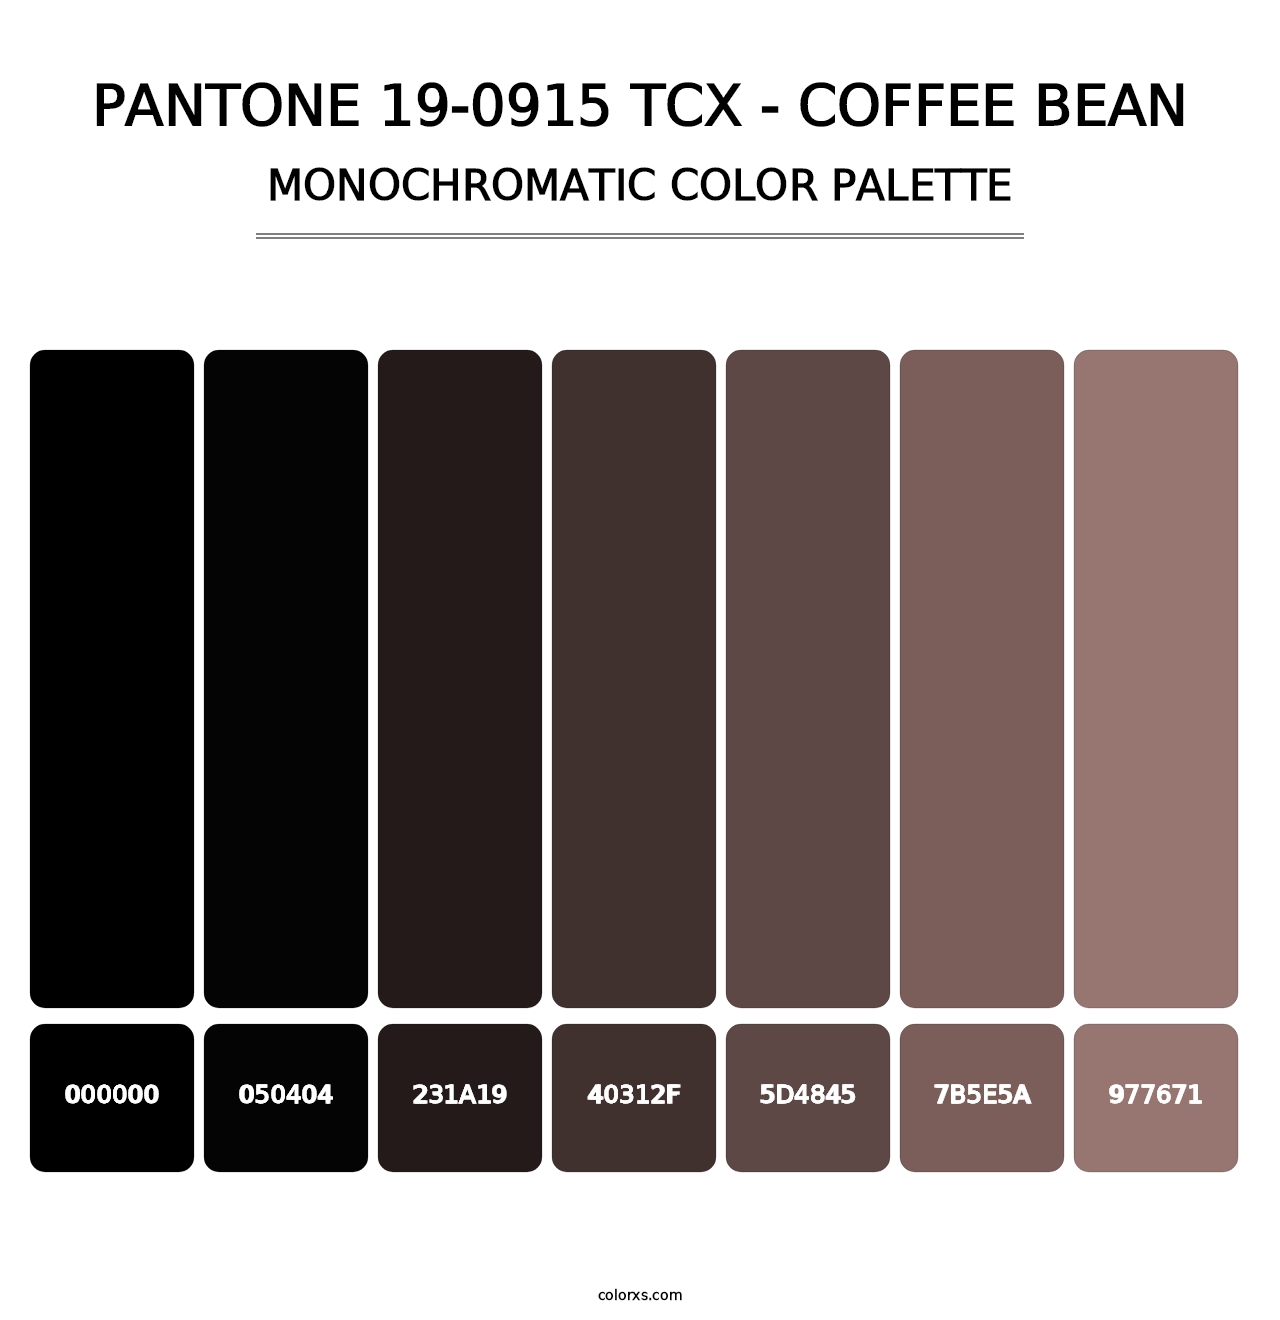 PANTONE 19-0915 TCX - Coffee Bean - Monochromatic Color Palette